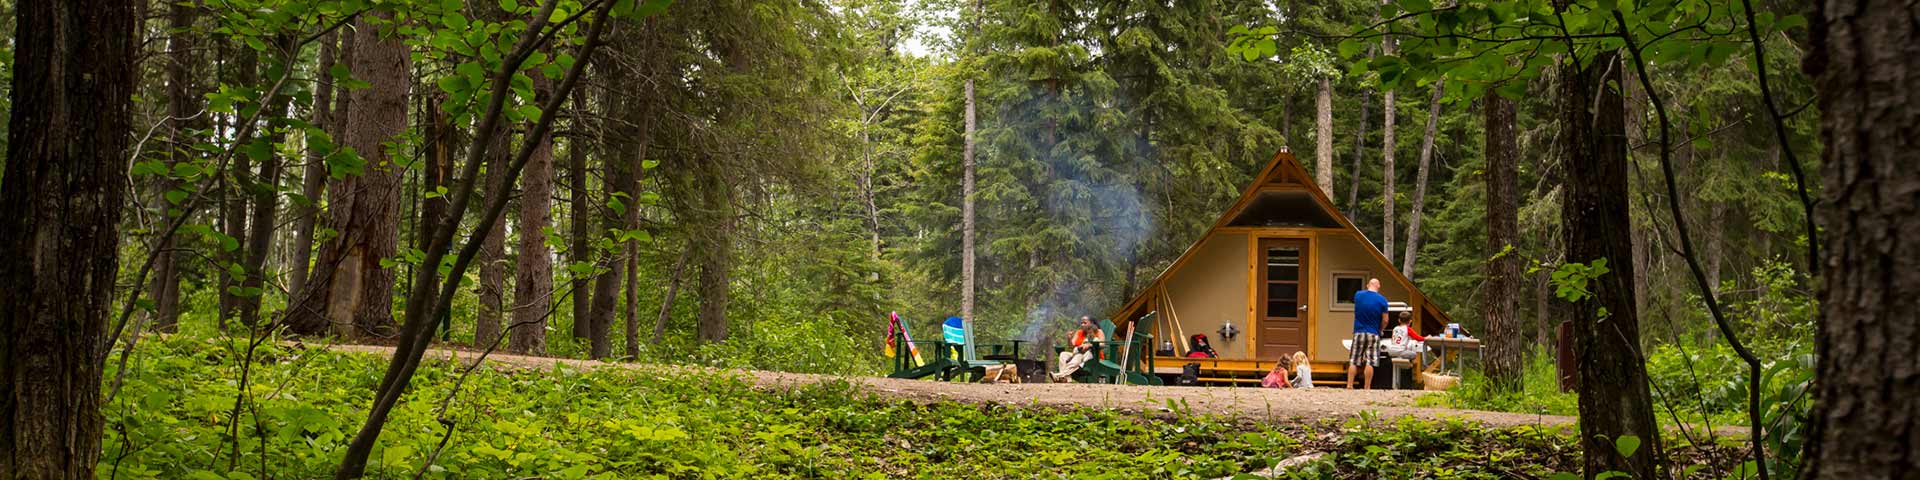 A family enjoys roasting marshmallows over a campfire at their oTENTik site